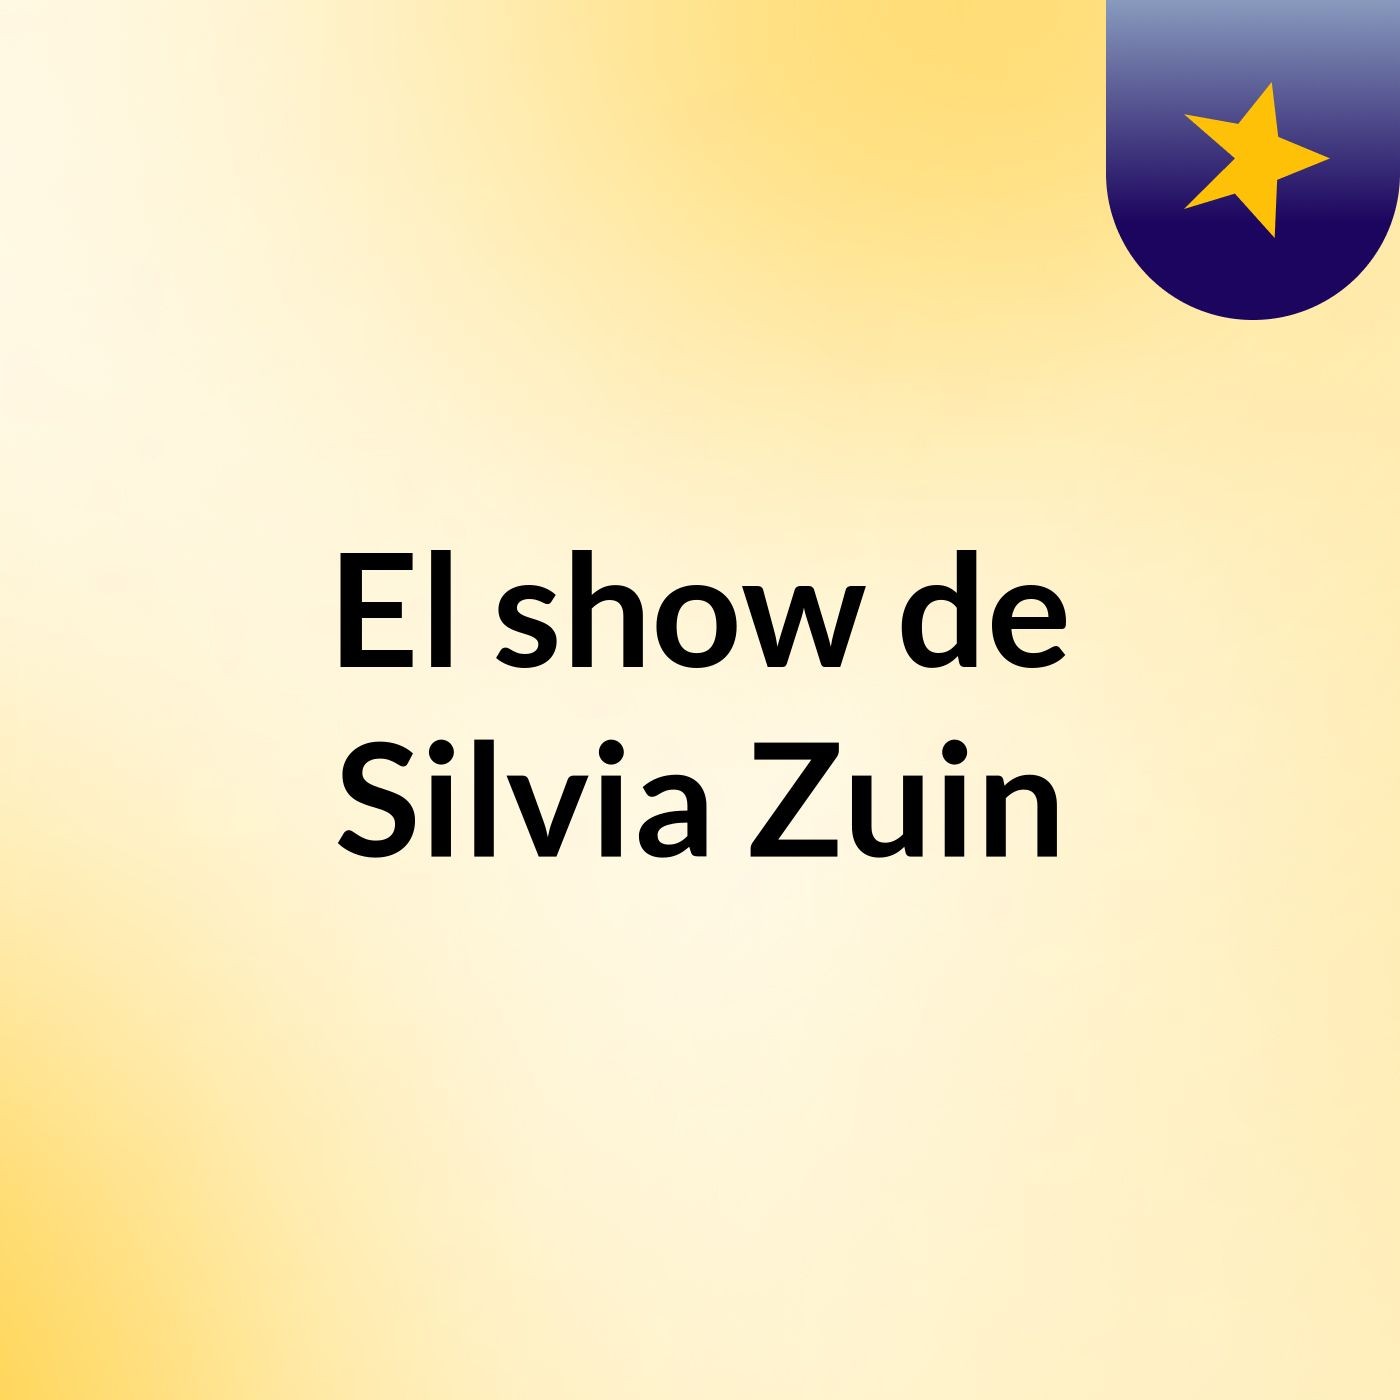 El show de Silvia Zuin